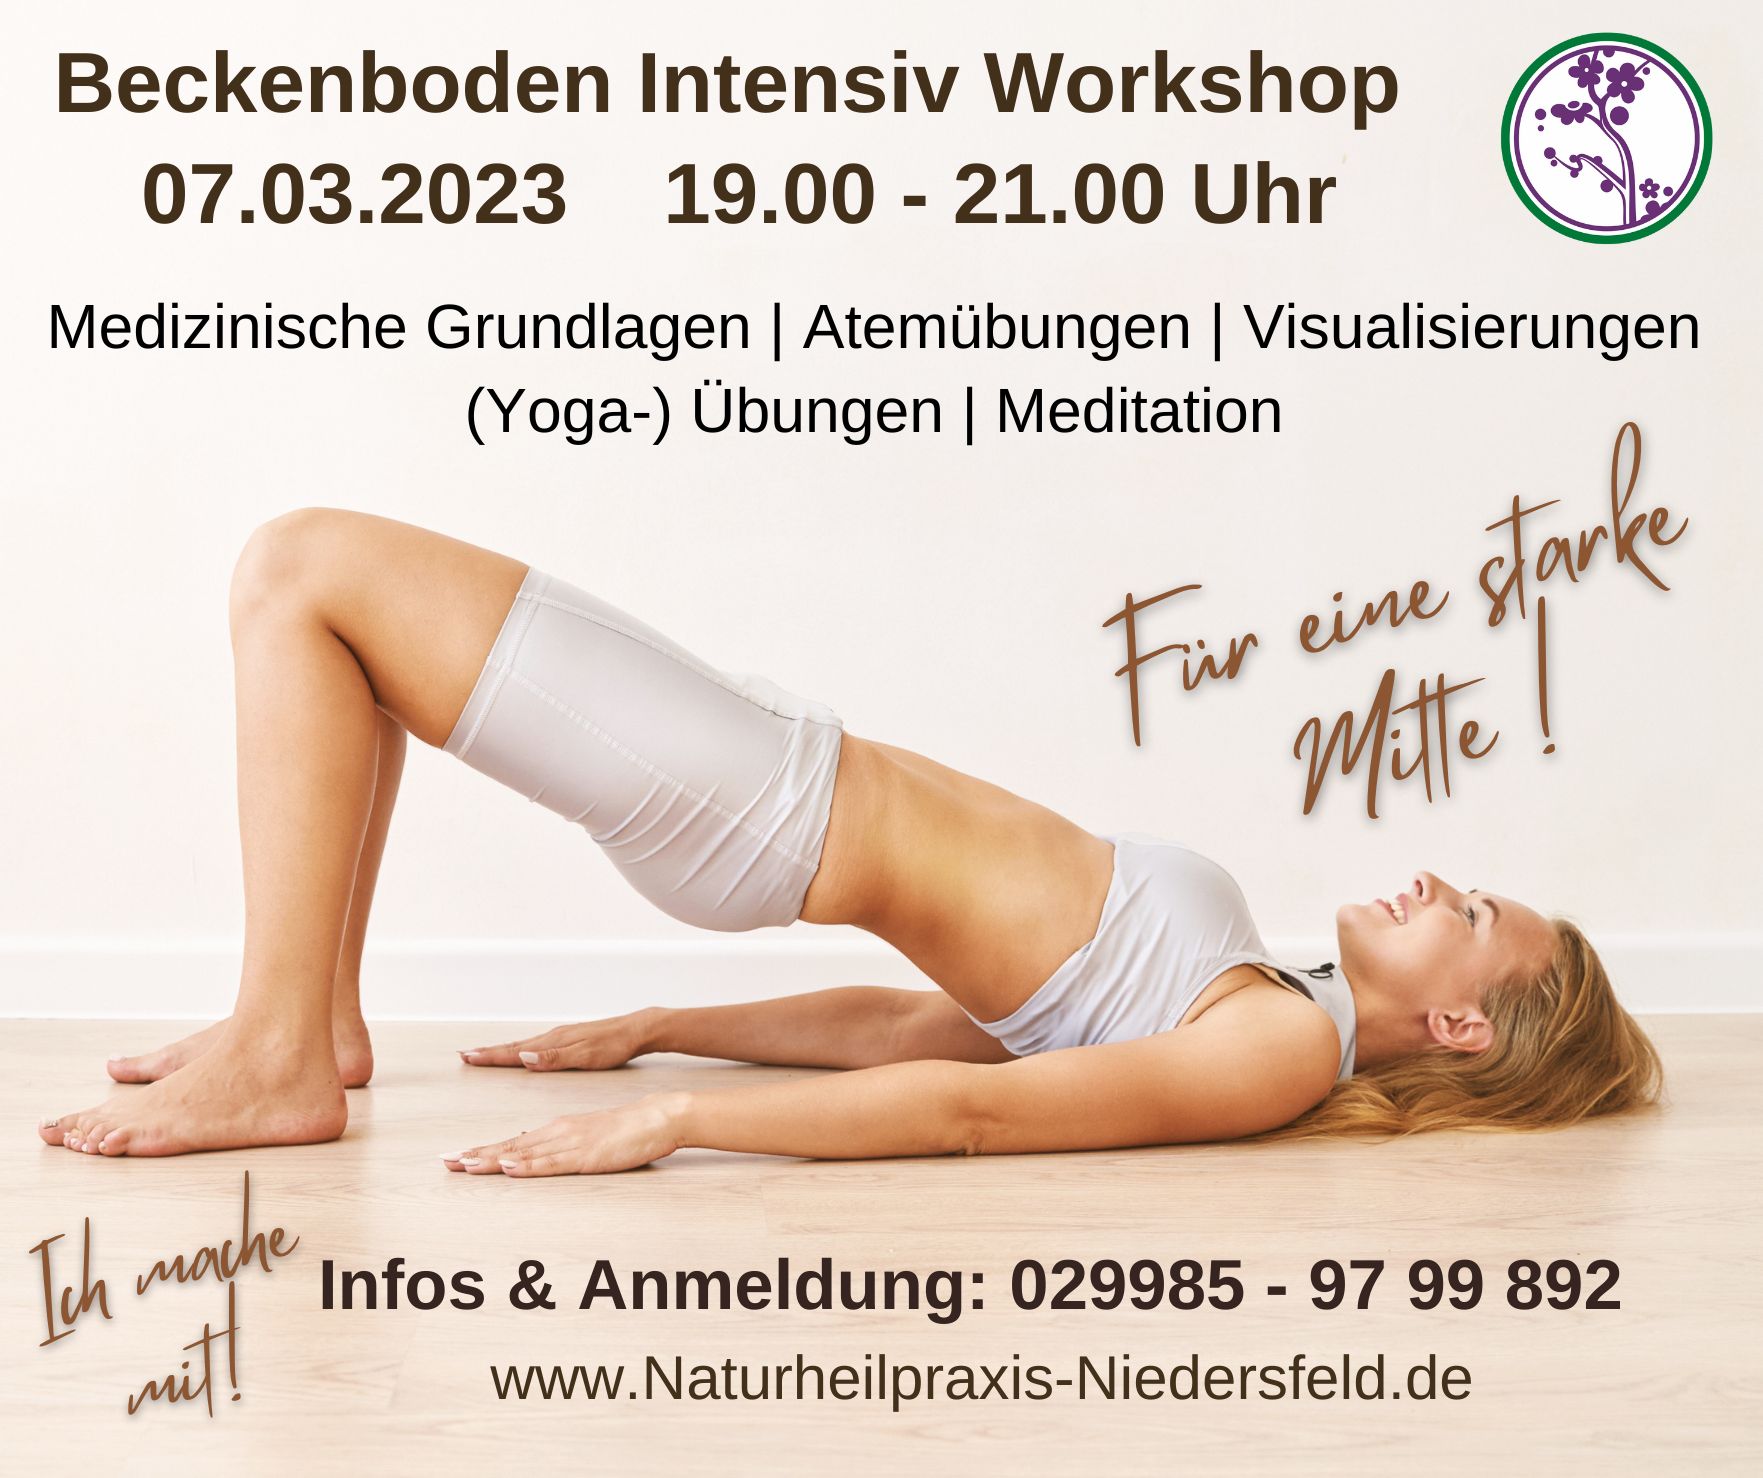 Beckenboden Intensiv Workshop